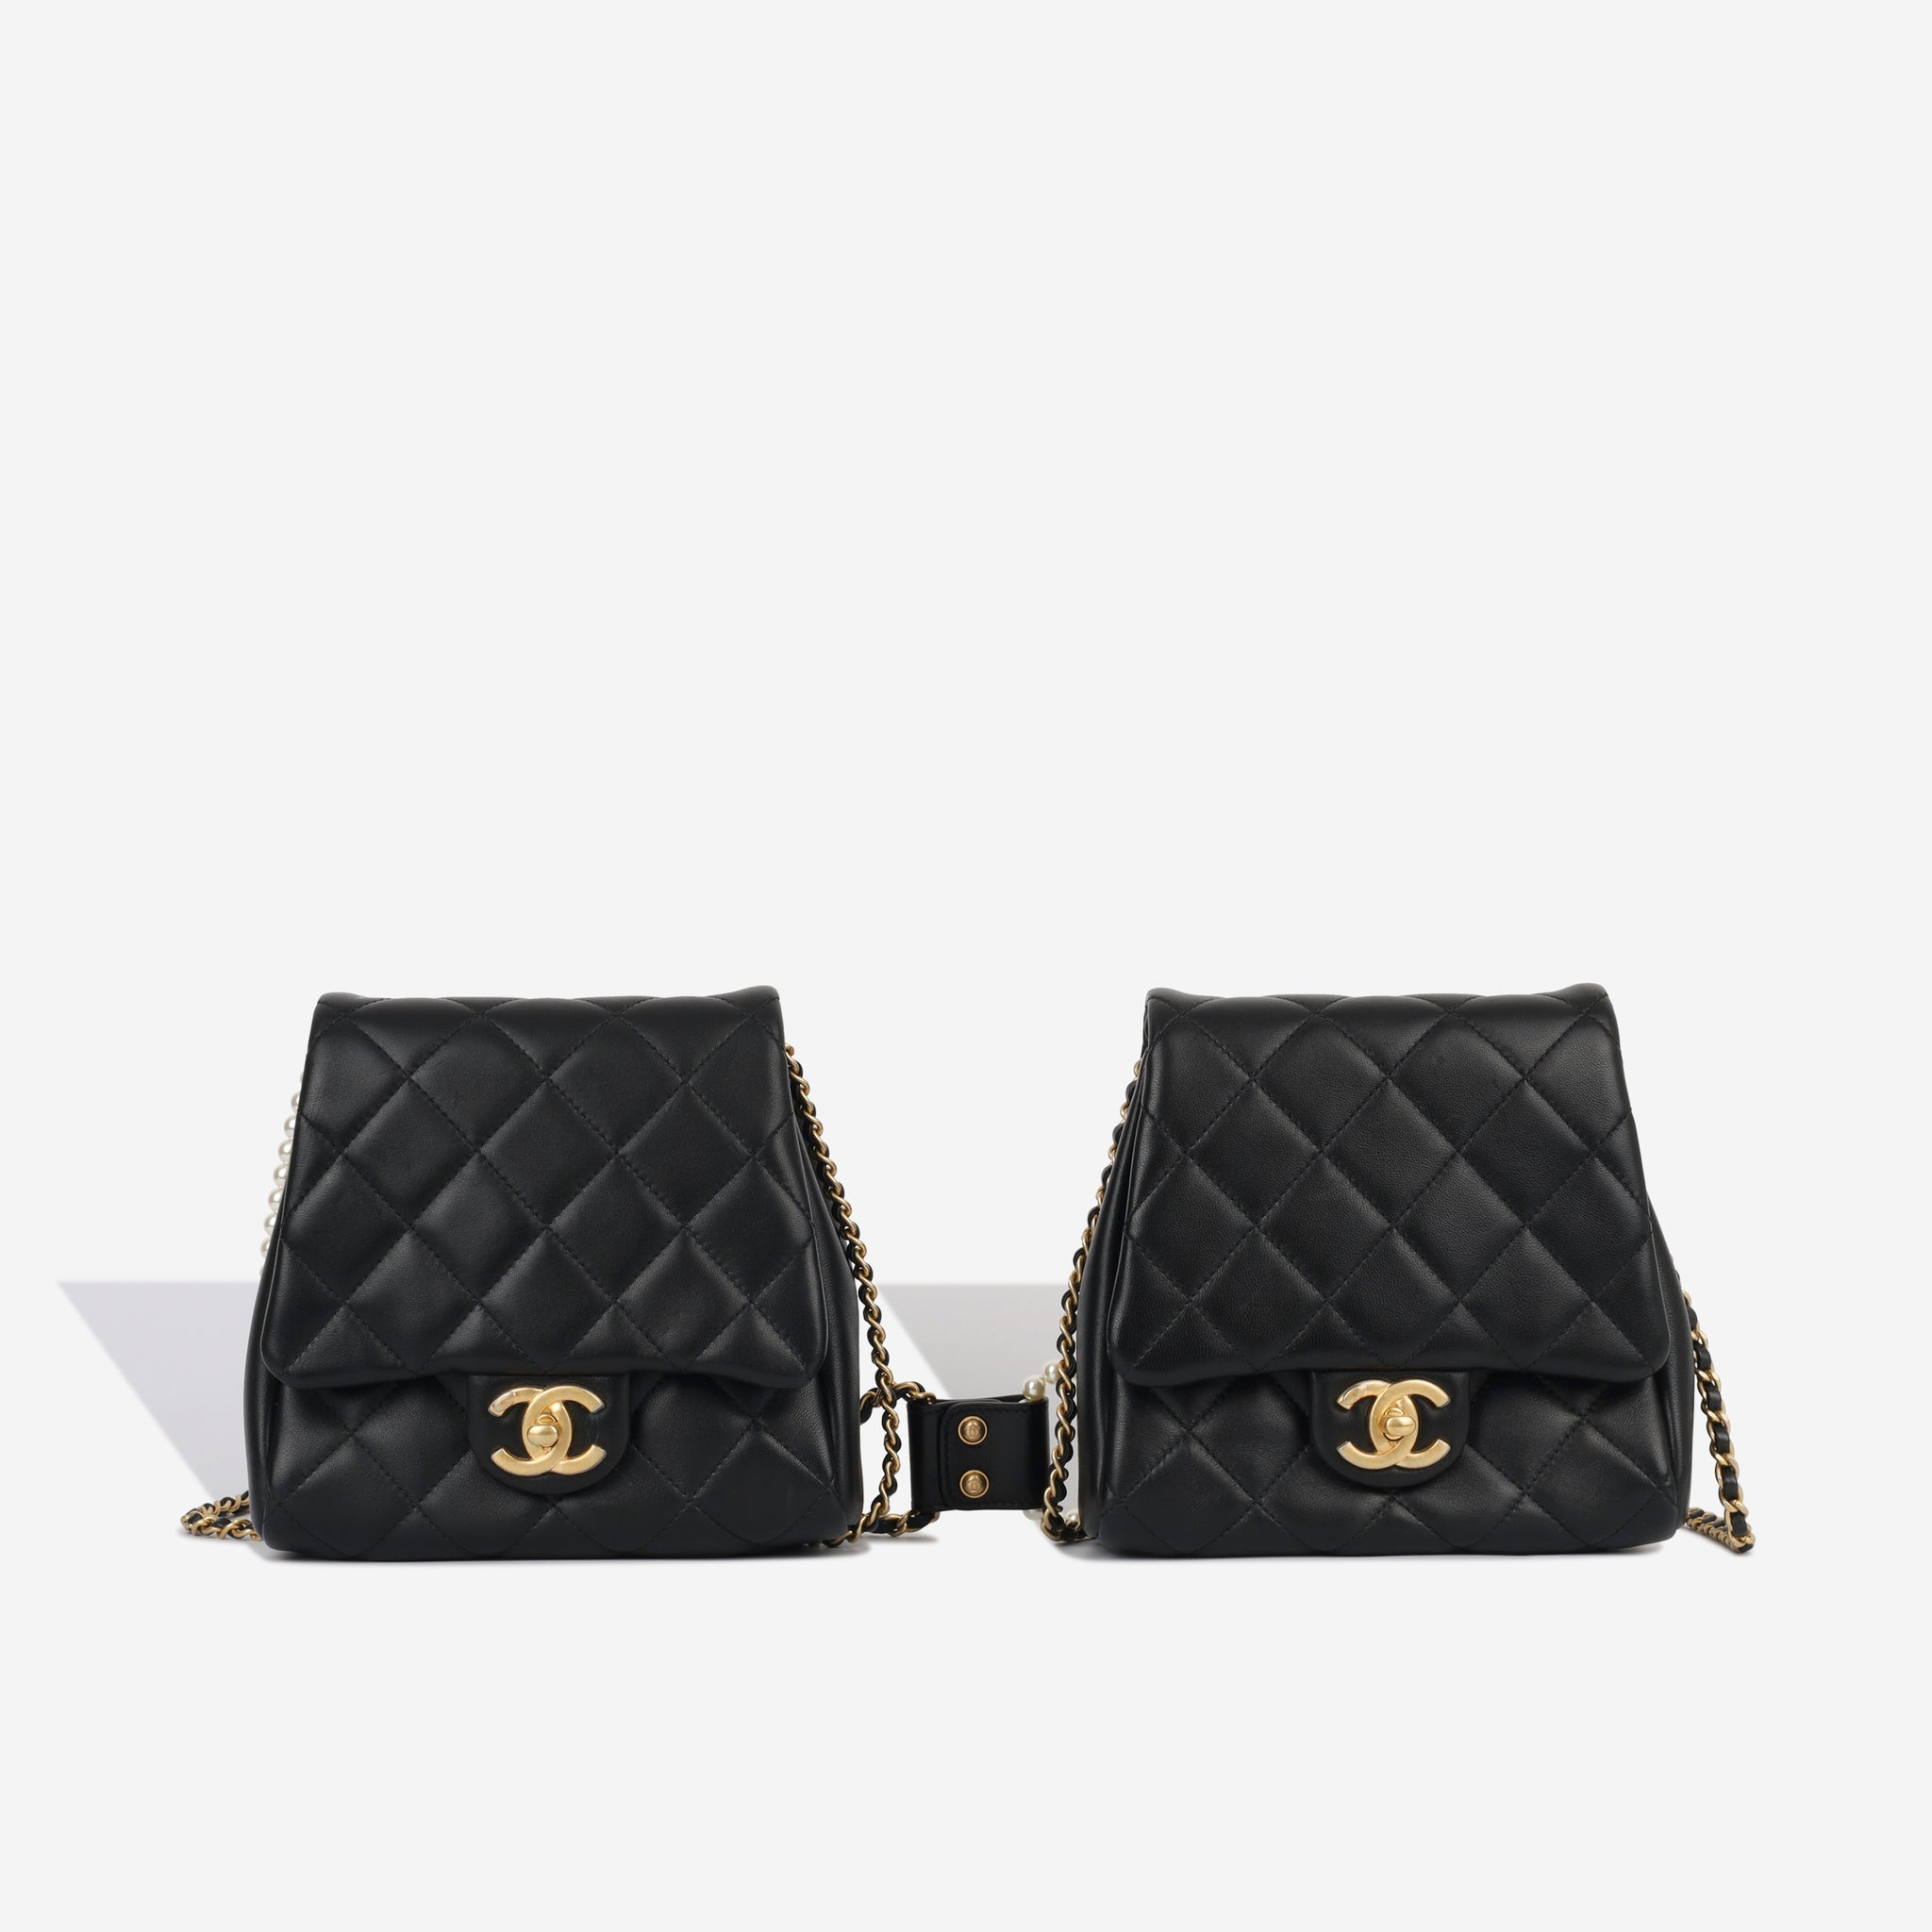 Chanel 2019 Lambskin Side-Packs - Black Shoulder Bags, Handbags